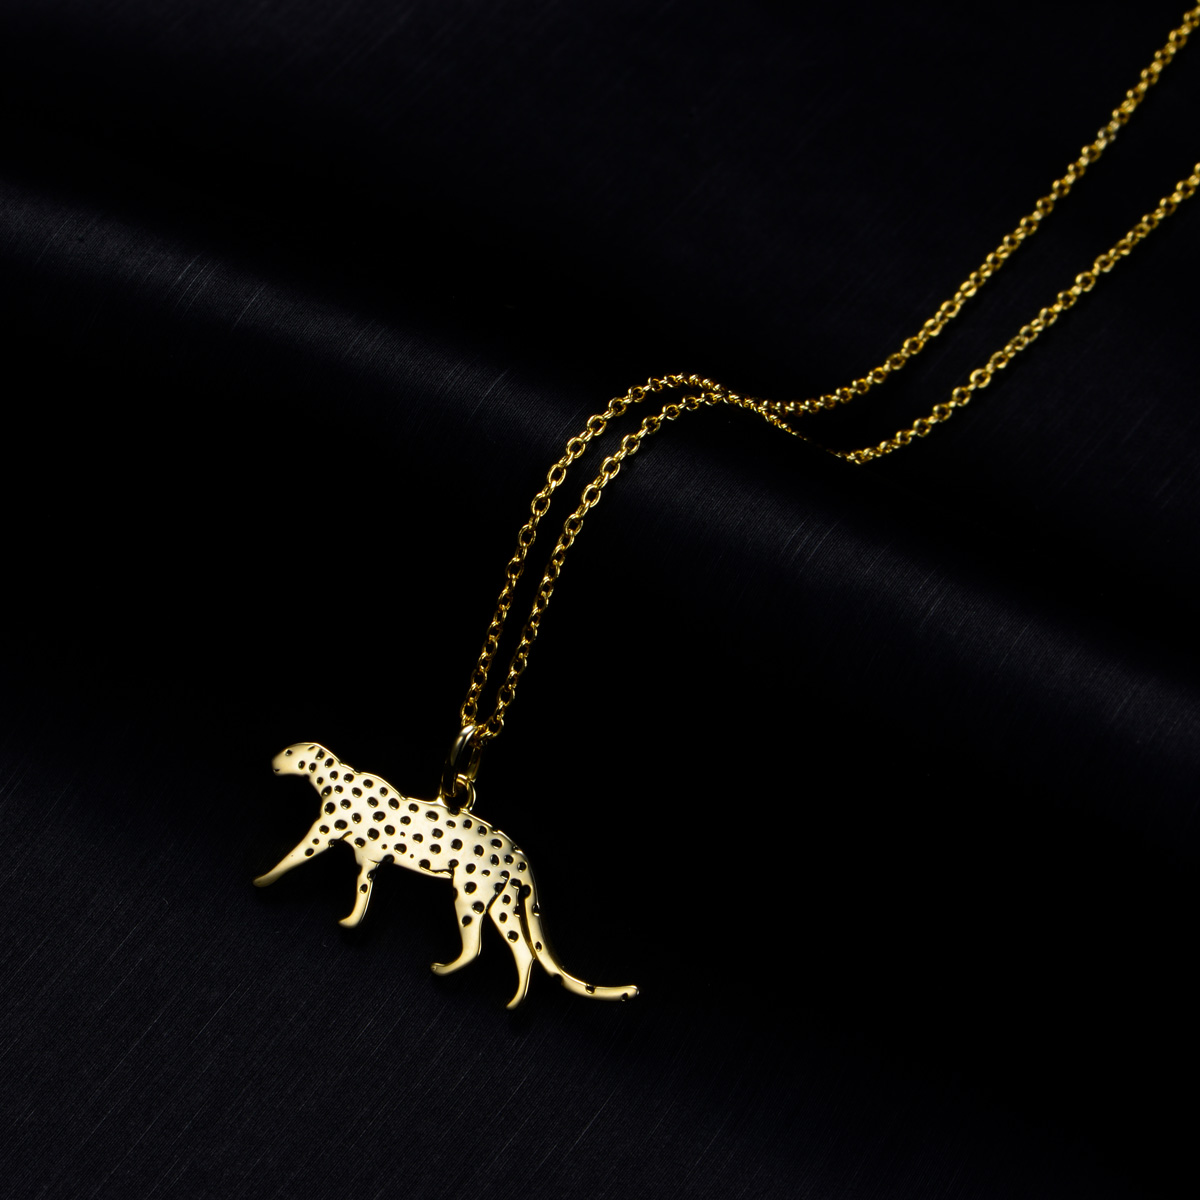 The creeping leopard pendant necklace